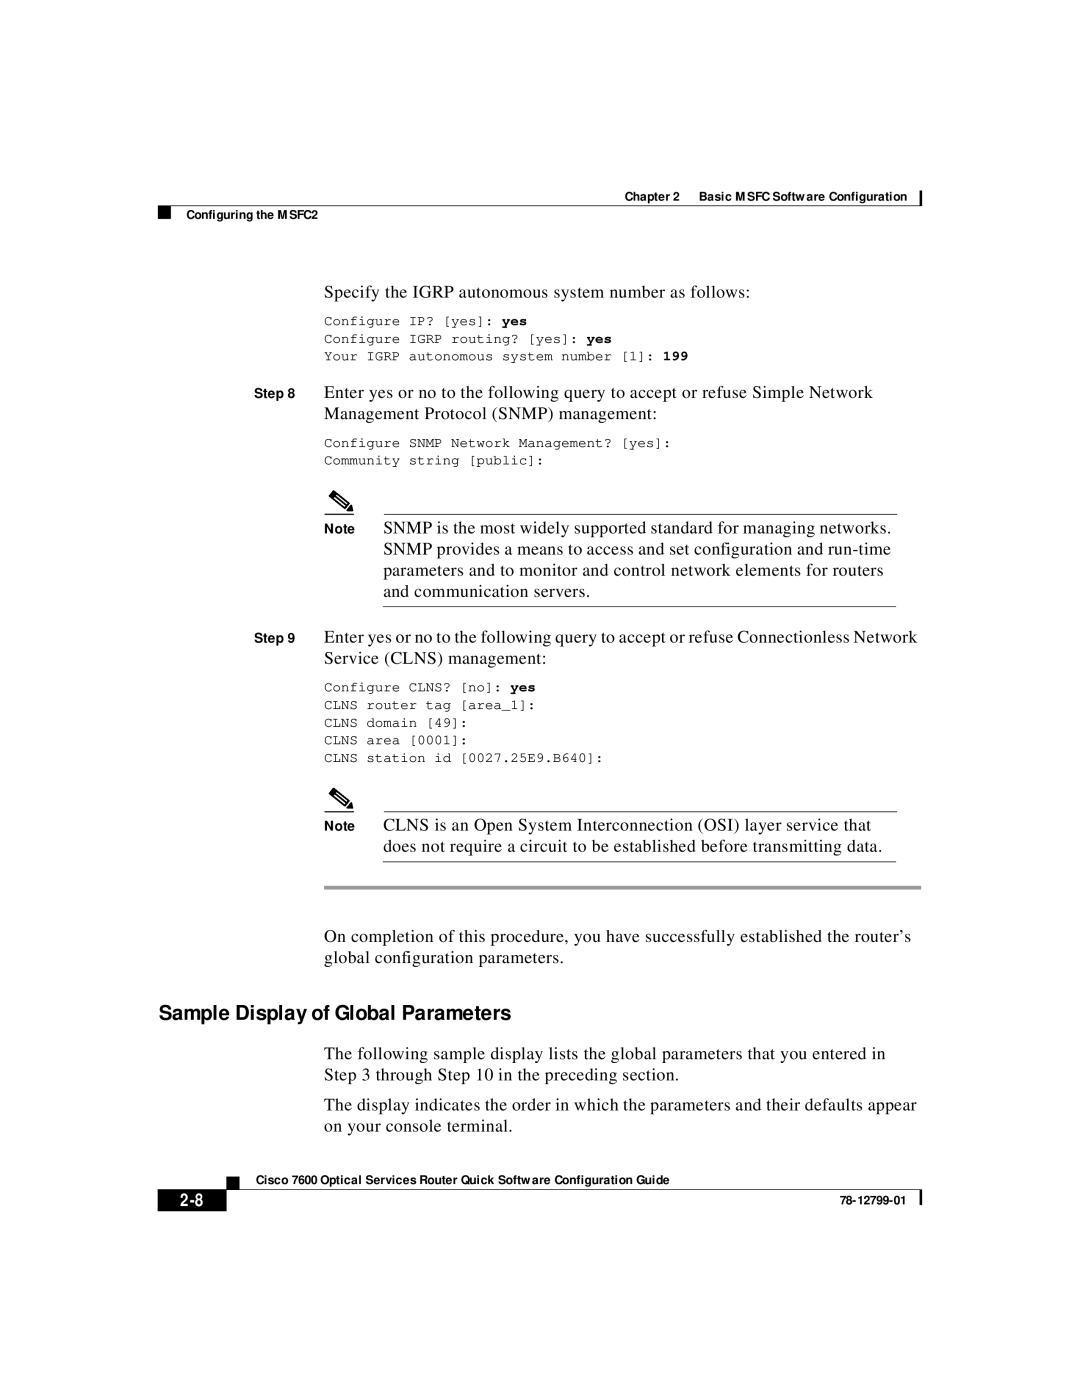 Cisco Systems 7600 manual Sample Display of Global Parameters 